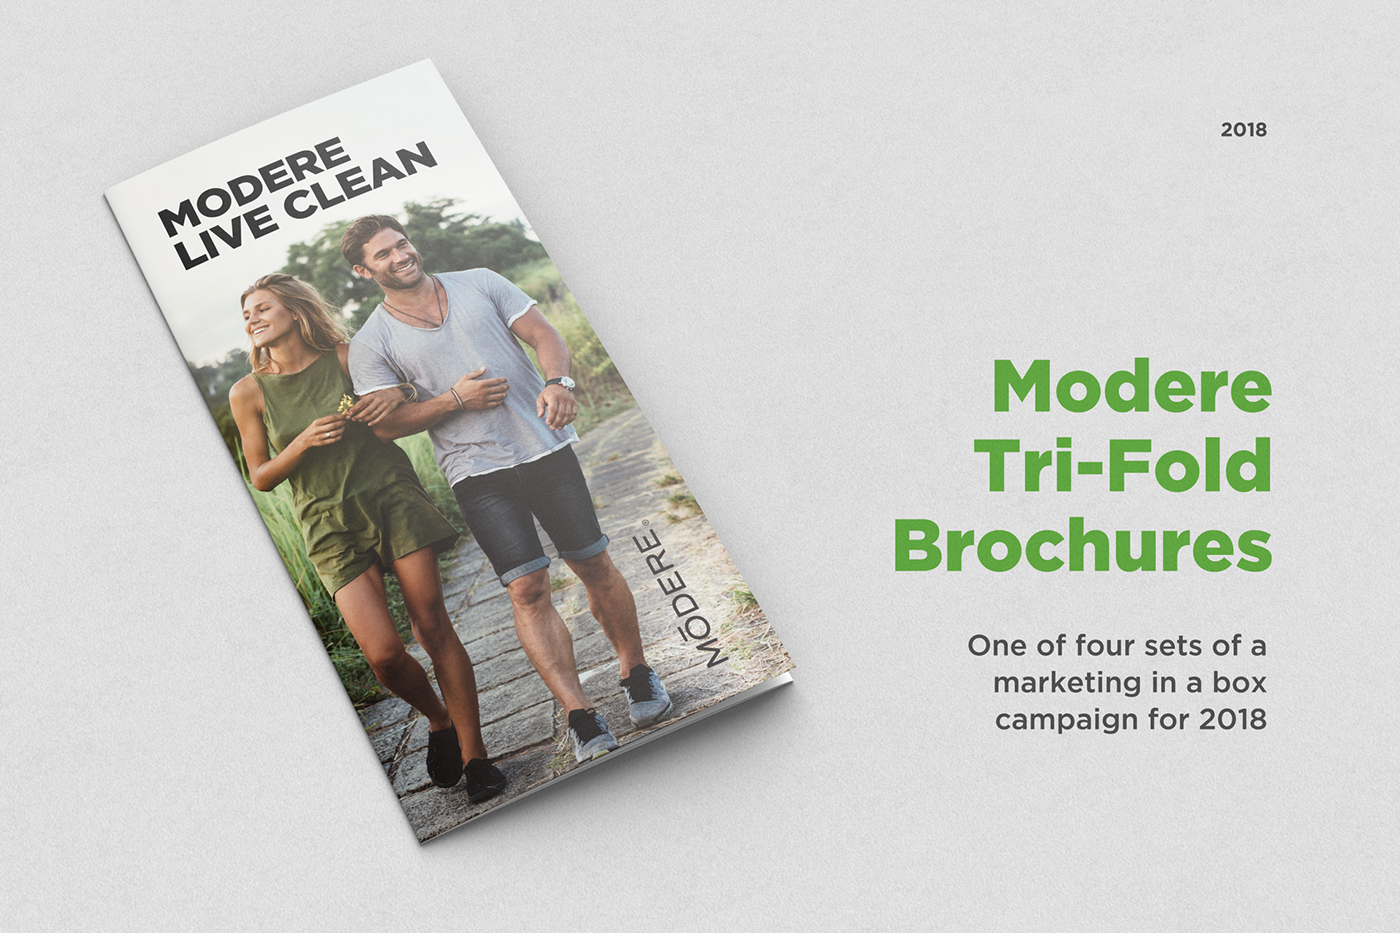 Modere Live Clean Steve Oliver trifold brochure tri-fold print design  corporate marketing   Adobe Portfolio